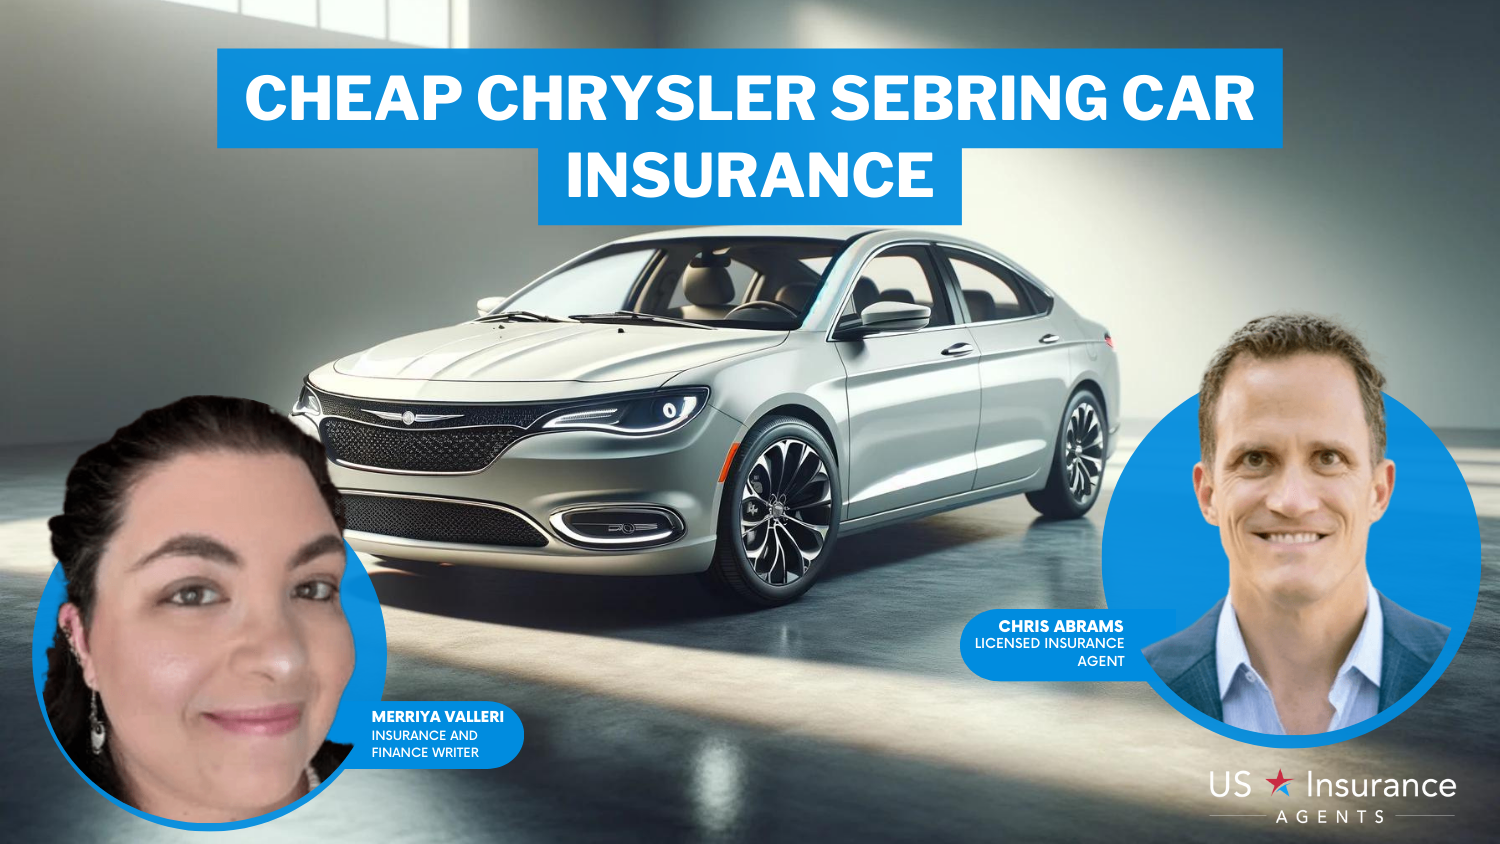 Cheap Chrysler Sebring Car Insurance: Nationwide, Allstate, and Travelers